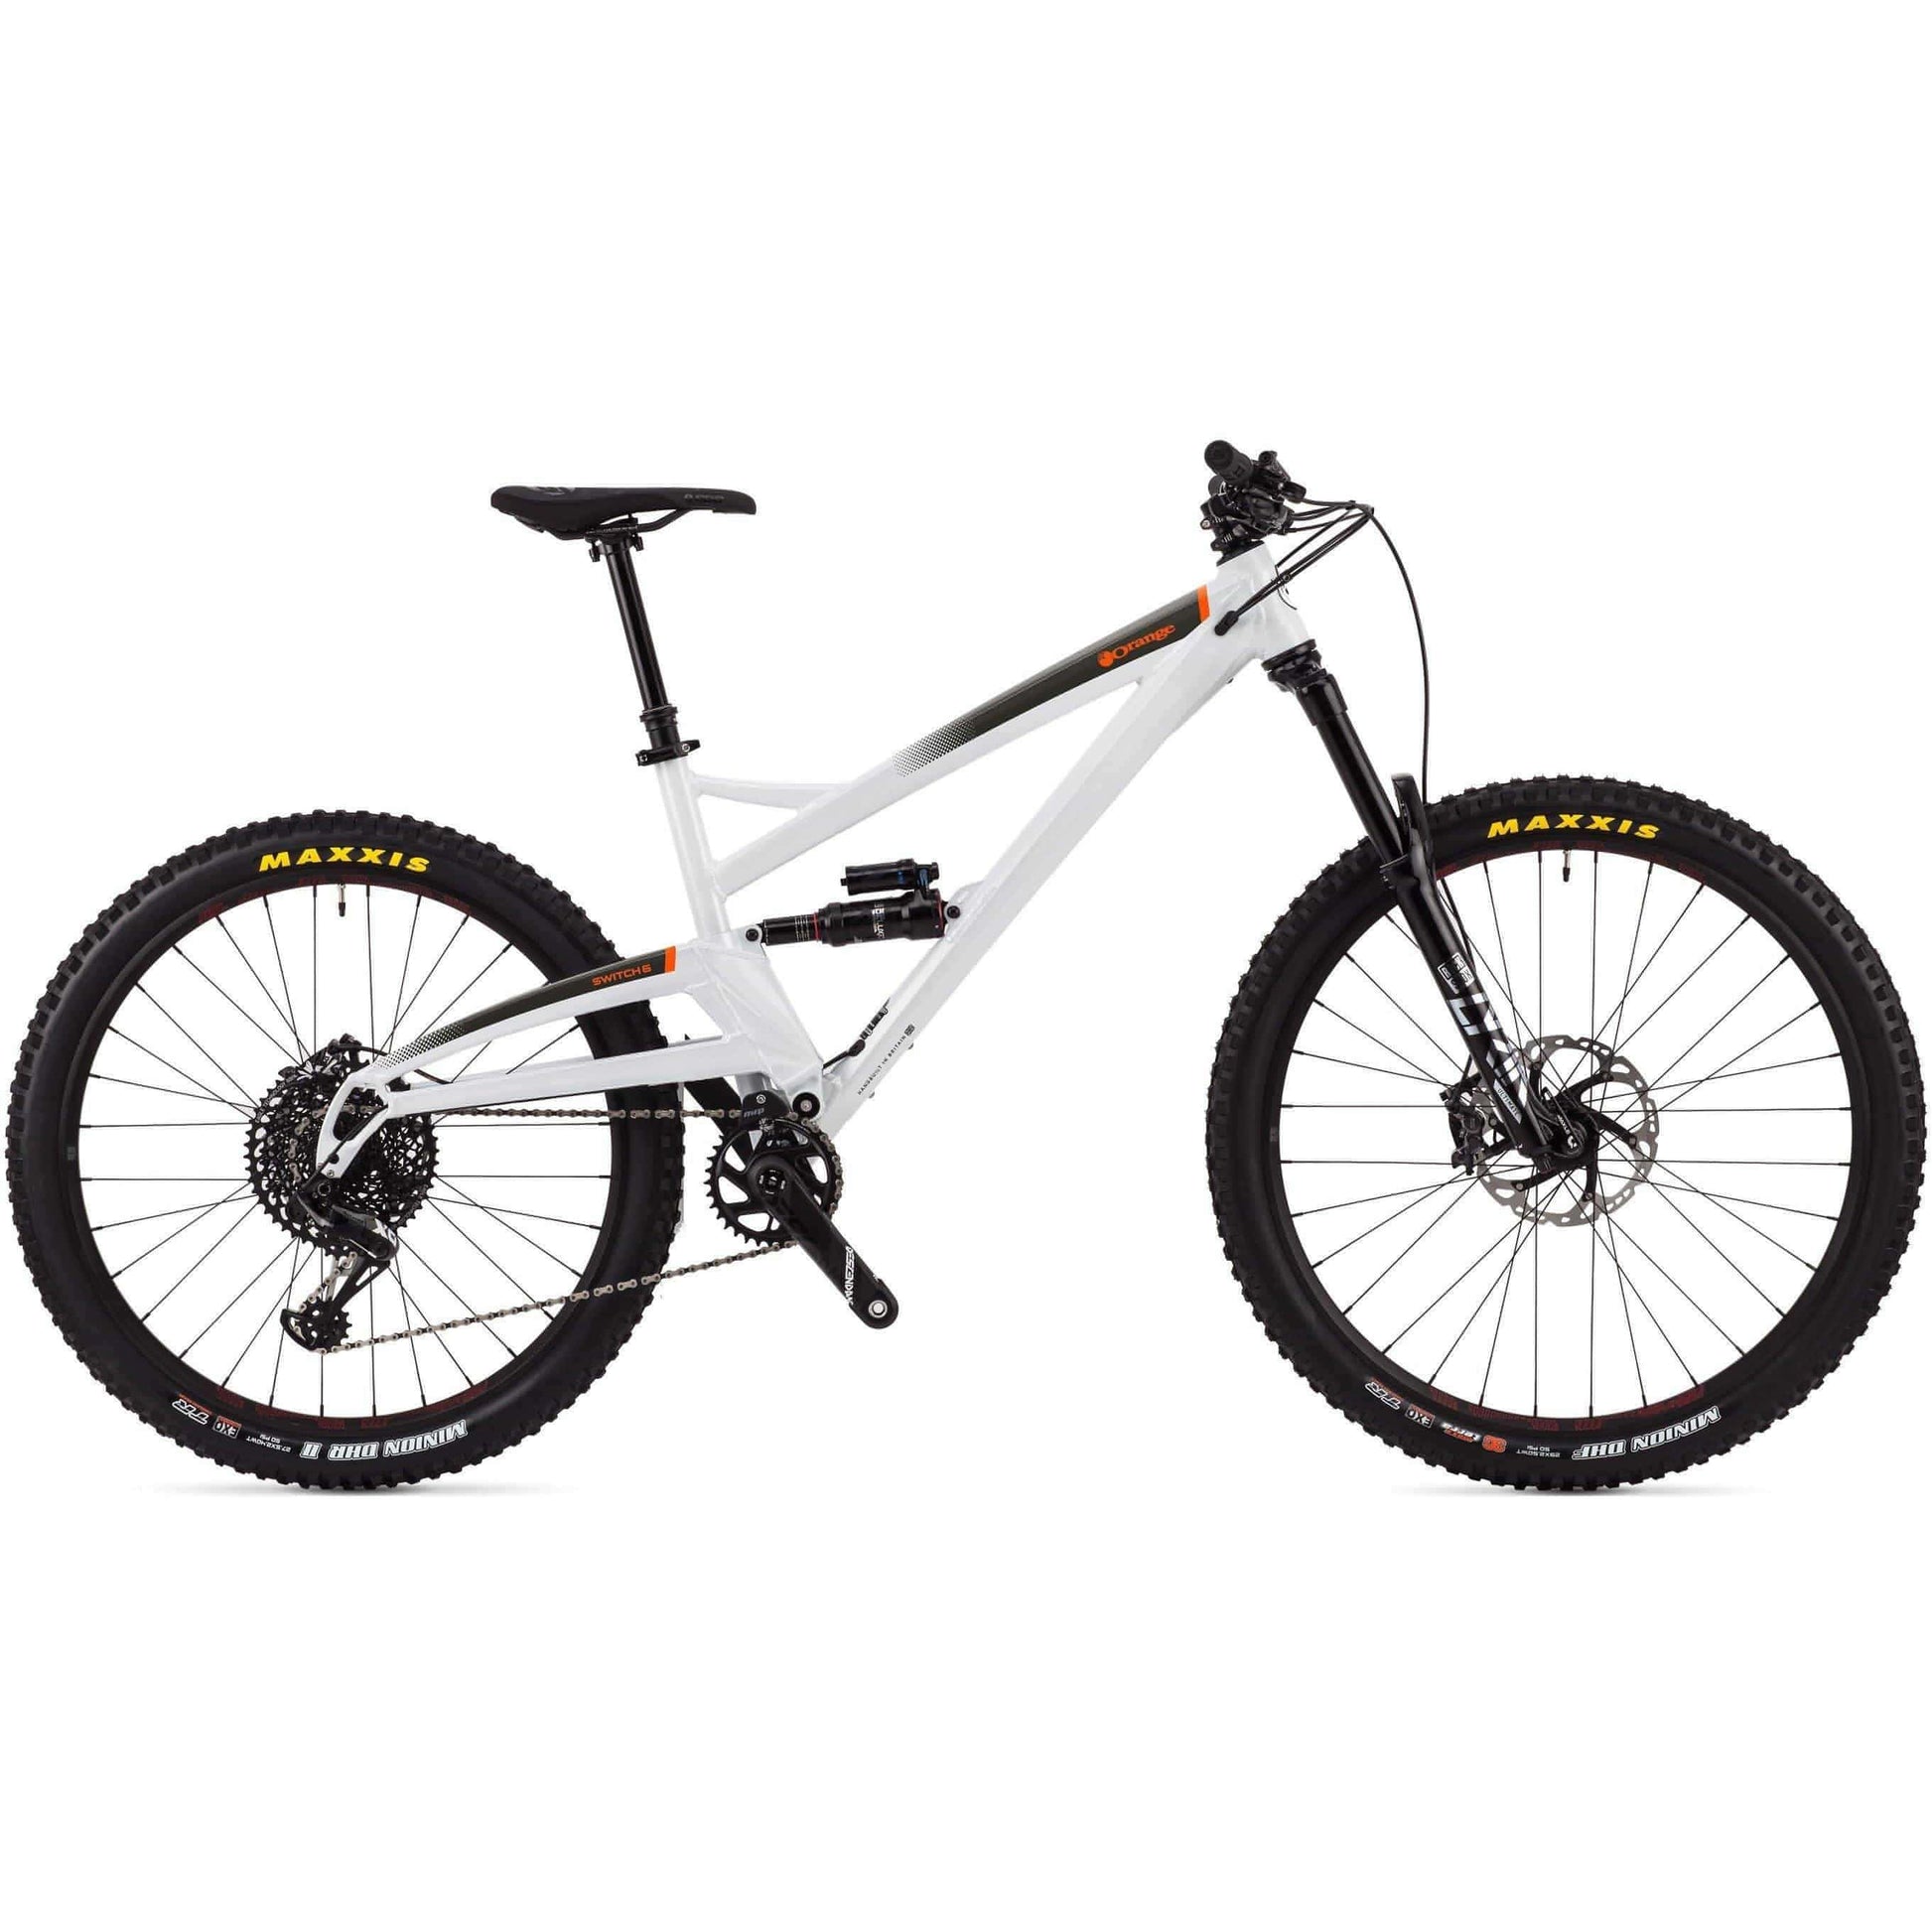 Orange Switch 6 RS Mountain Bike 2021 - White 5054977113107 - Start Fitness